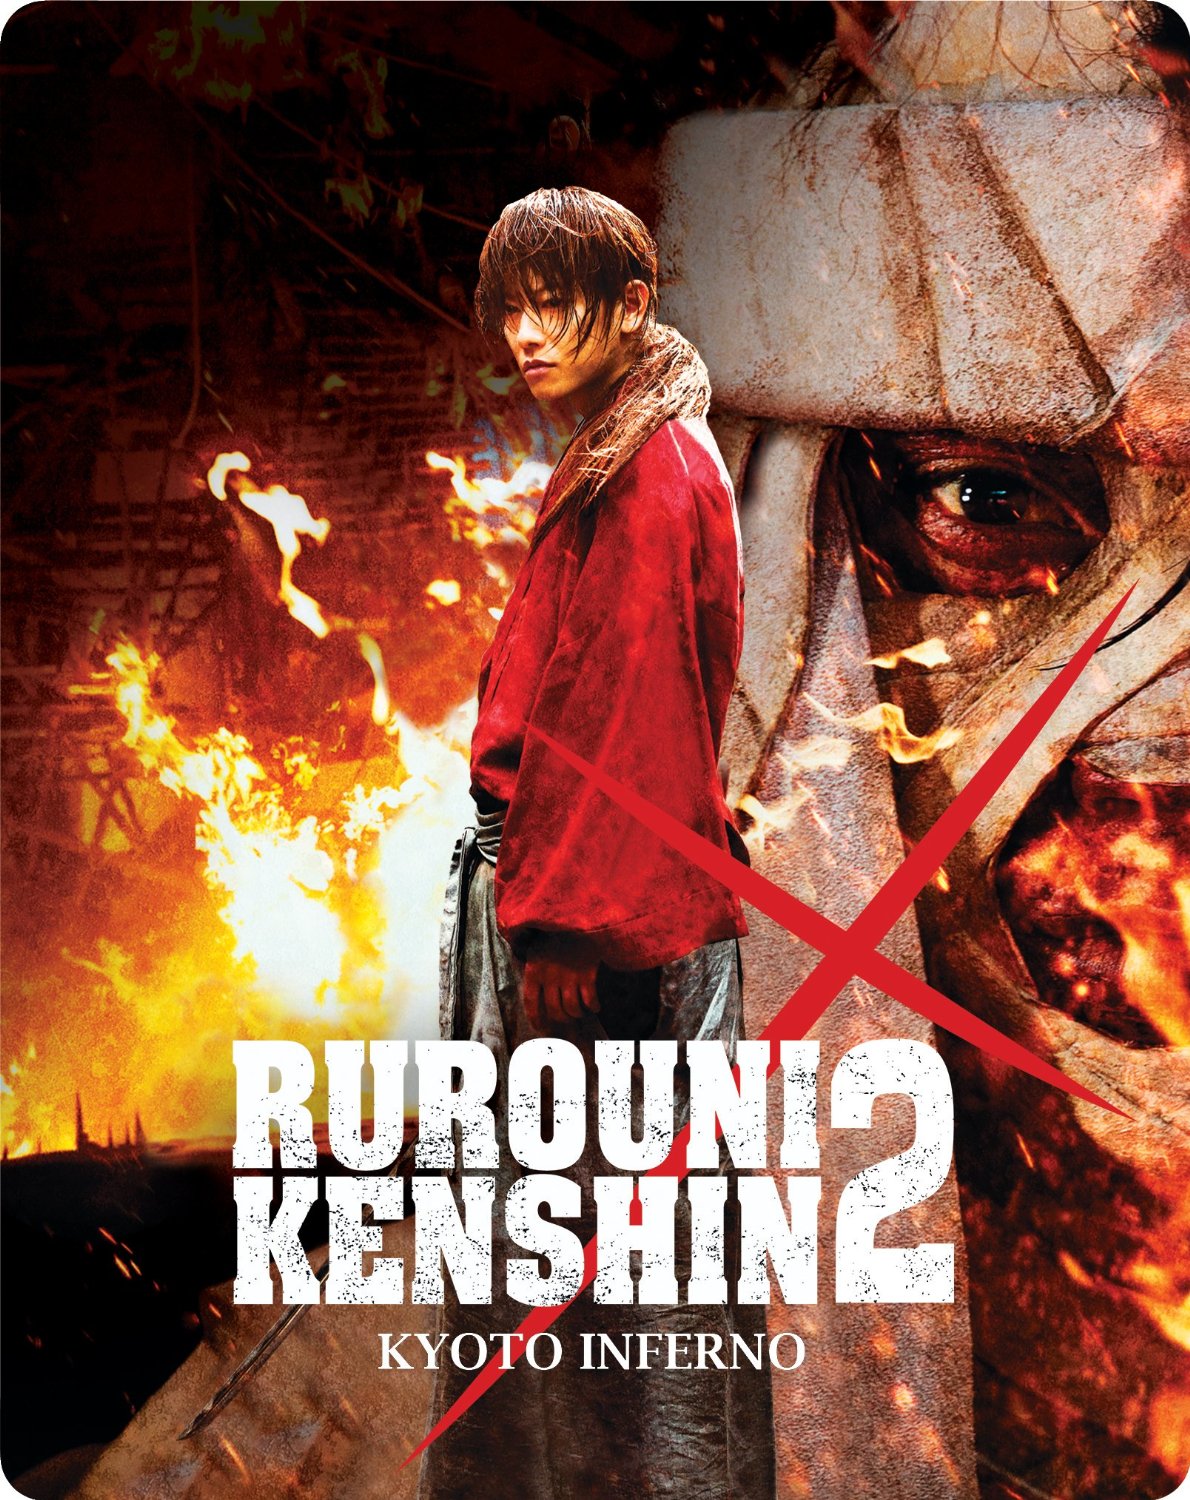 Himura Kenshin/Live-Action, Rurouni Kenshin Wiki